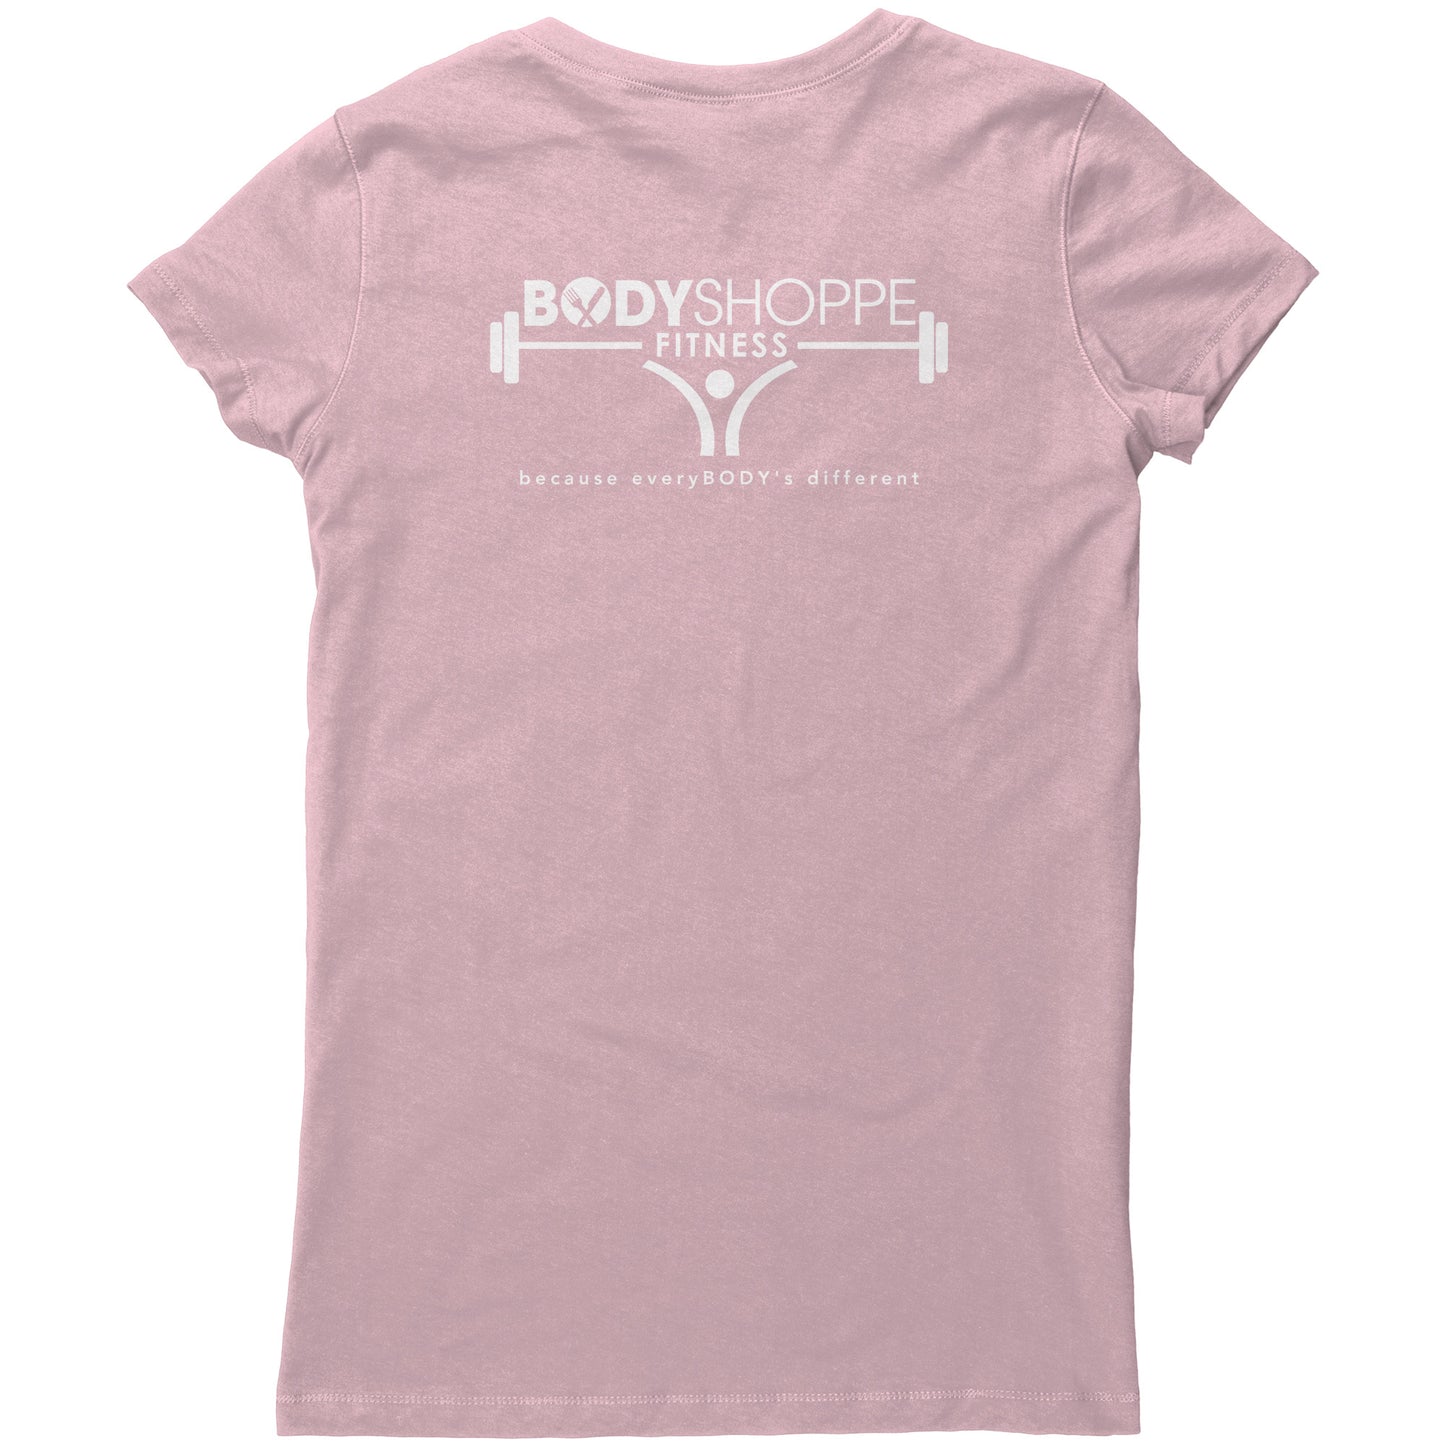 Rebecca - Body Shoppe Fitness